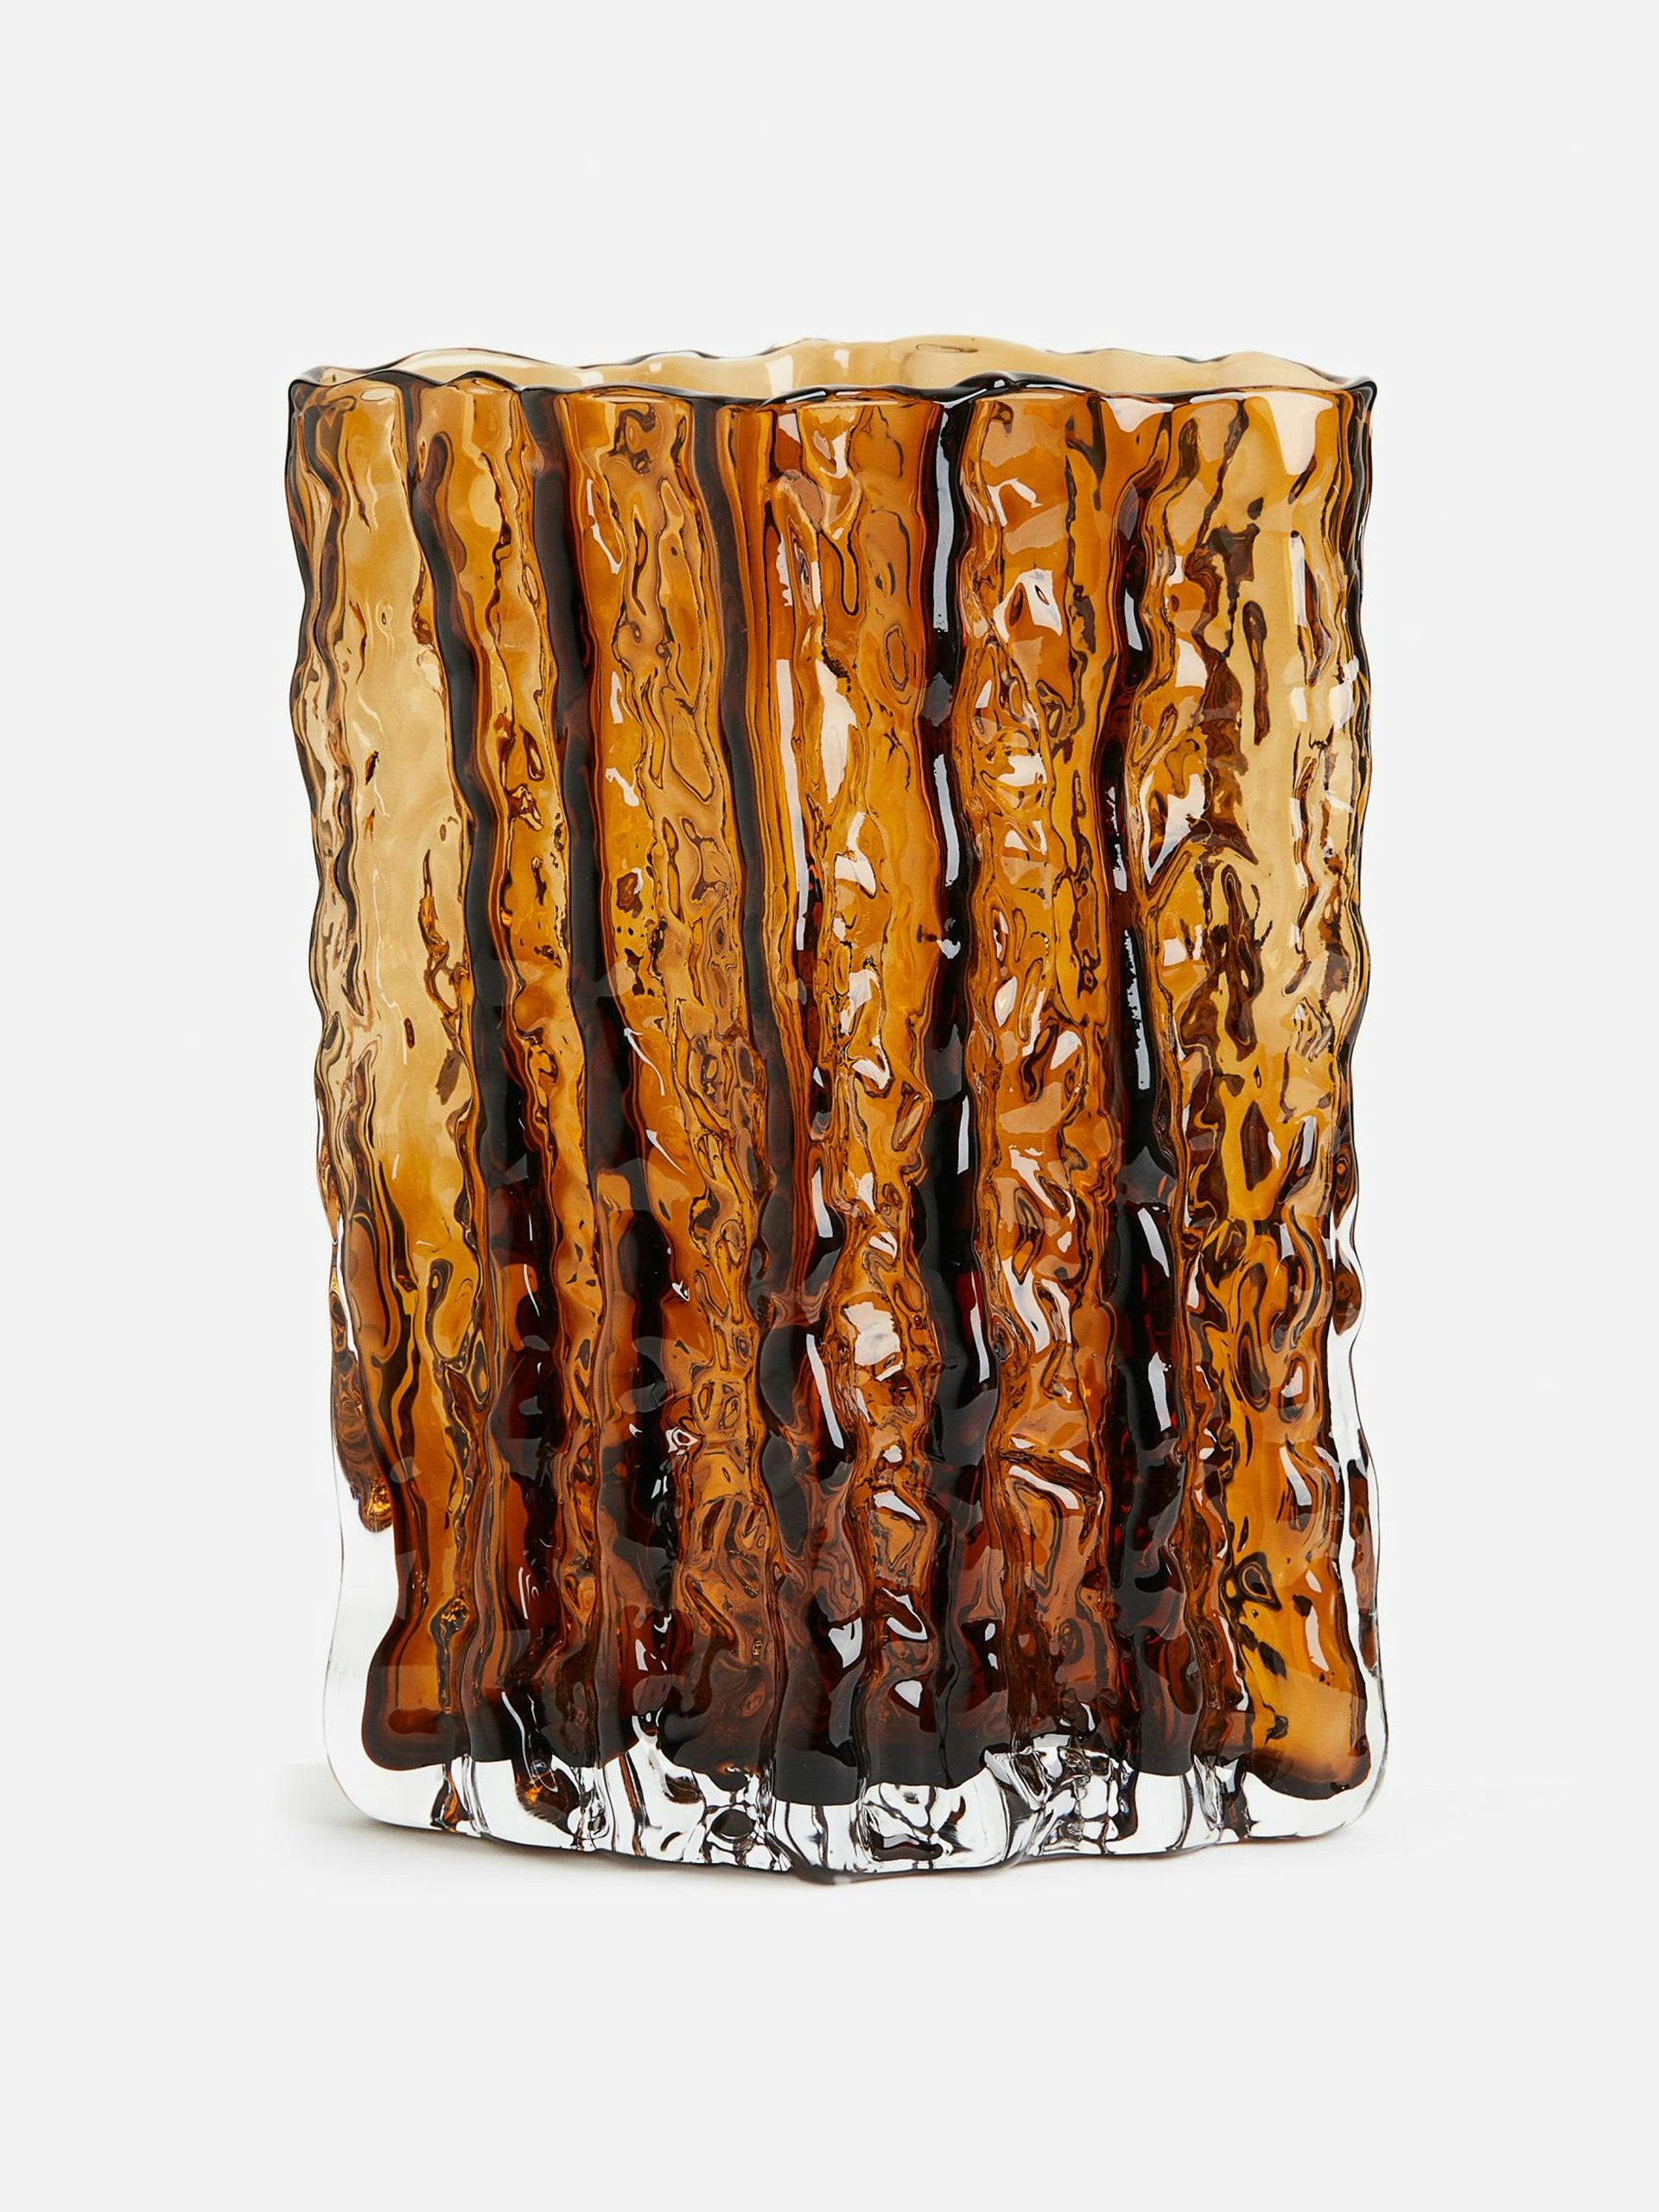 Large textured glass vase